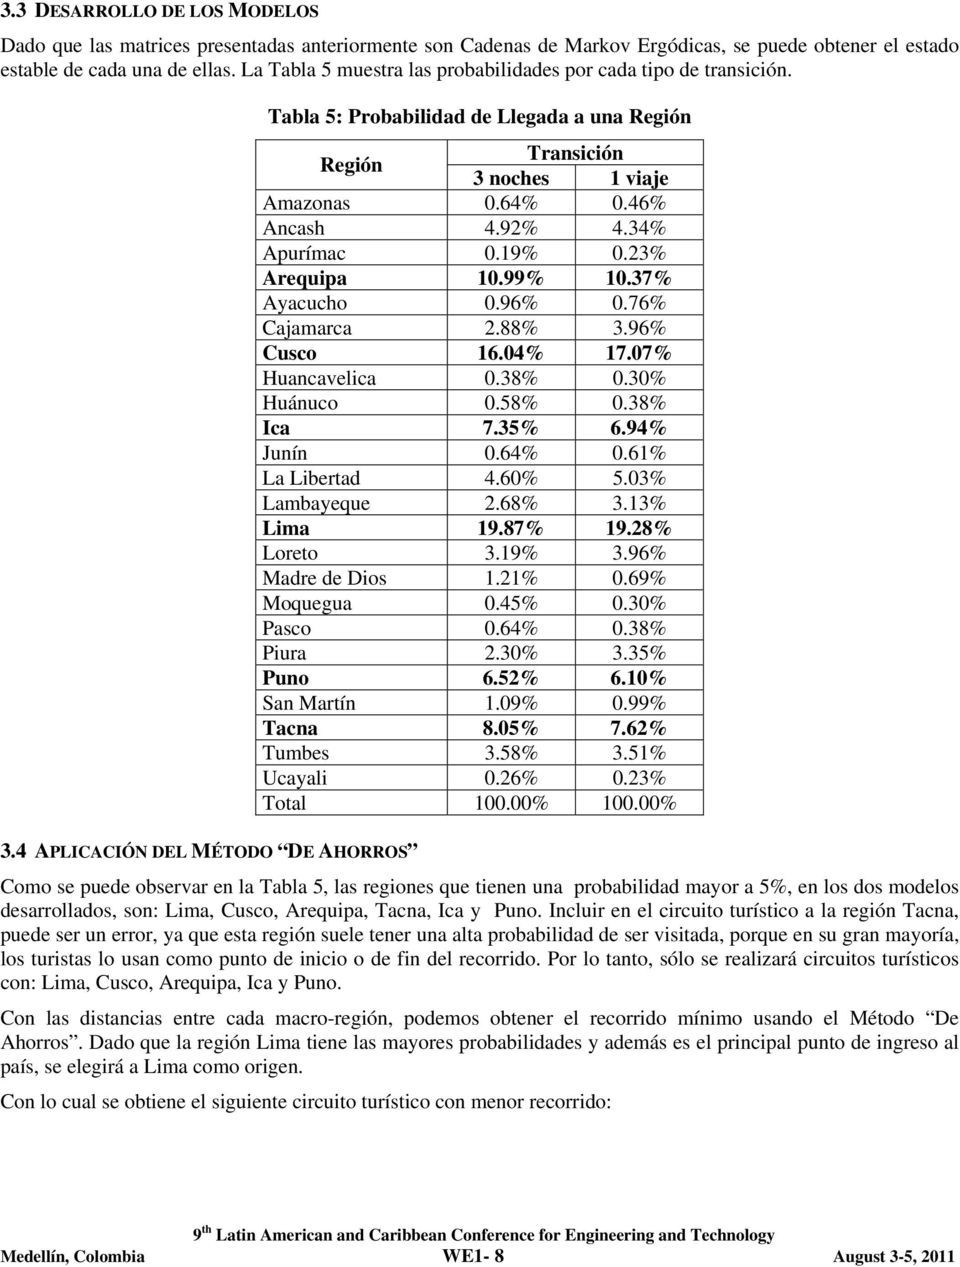 64% 0.46% Ancash 4.9% 4.34% Apurímac 0.19% 0.3% Arequipa 10.99% 10.37% Ayacucho 0.96% 0.76% Cajamarca.88% 3.96% Cusco 16.04% 17.07% Huancavelica 0.38% 0.30% Huánuco 0.58% 0.38% Ica 7.35% 6.